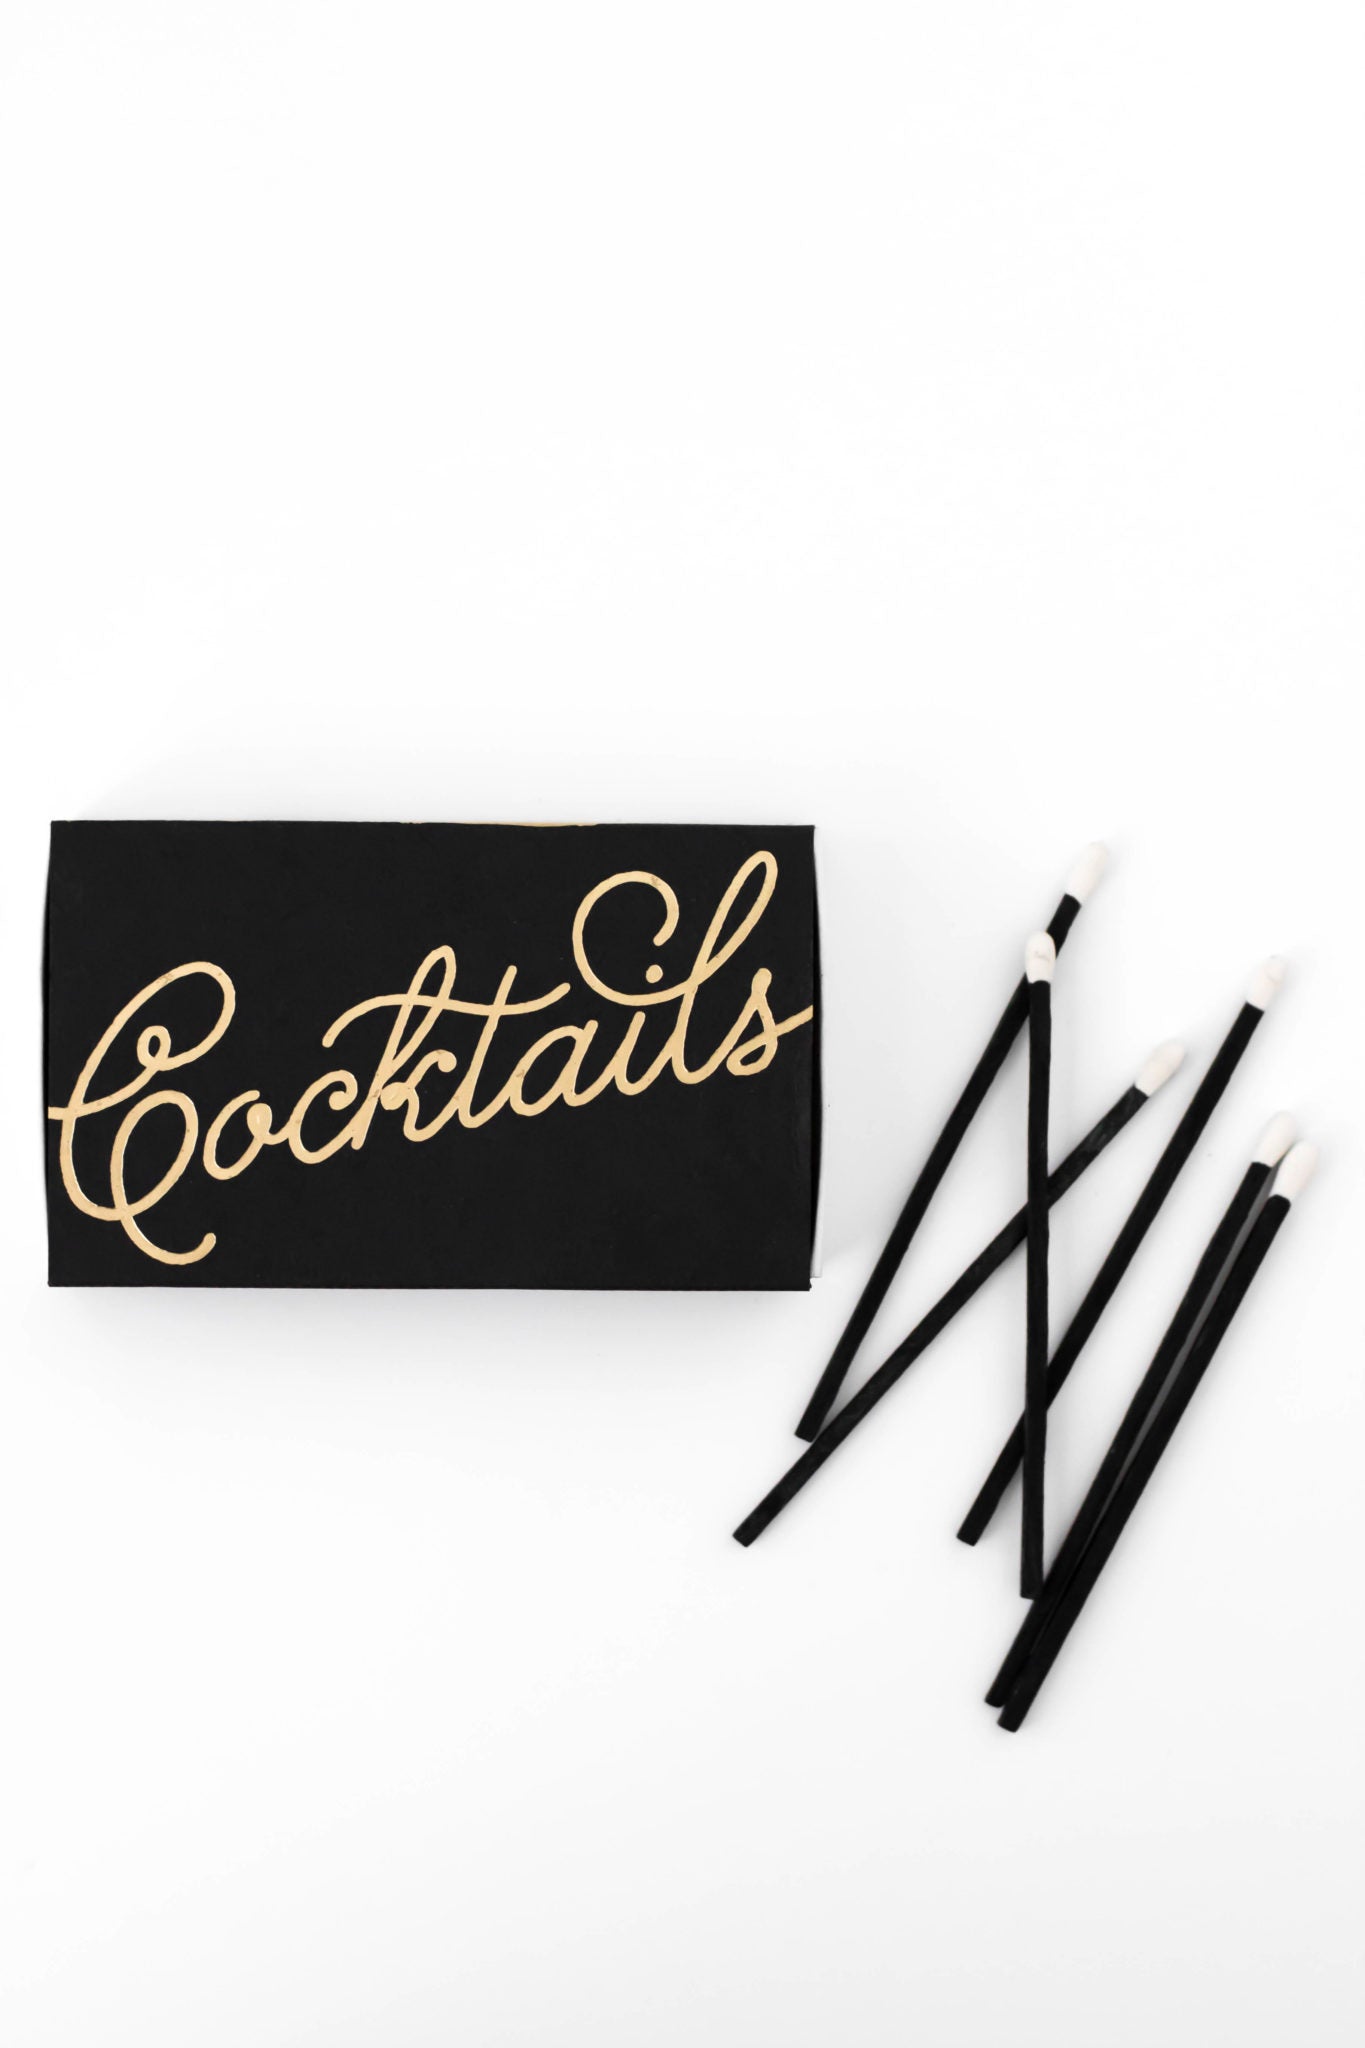 Cocktails Matches